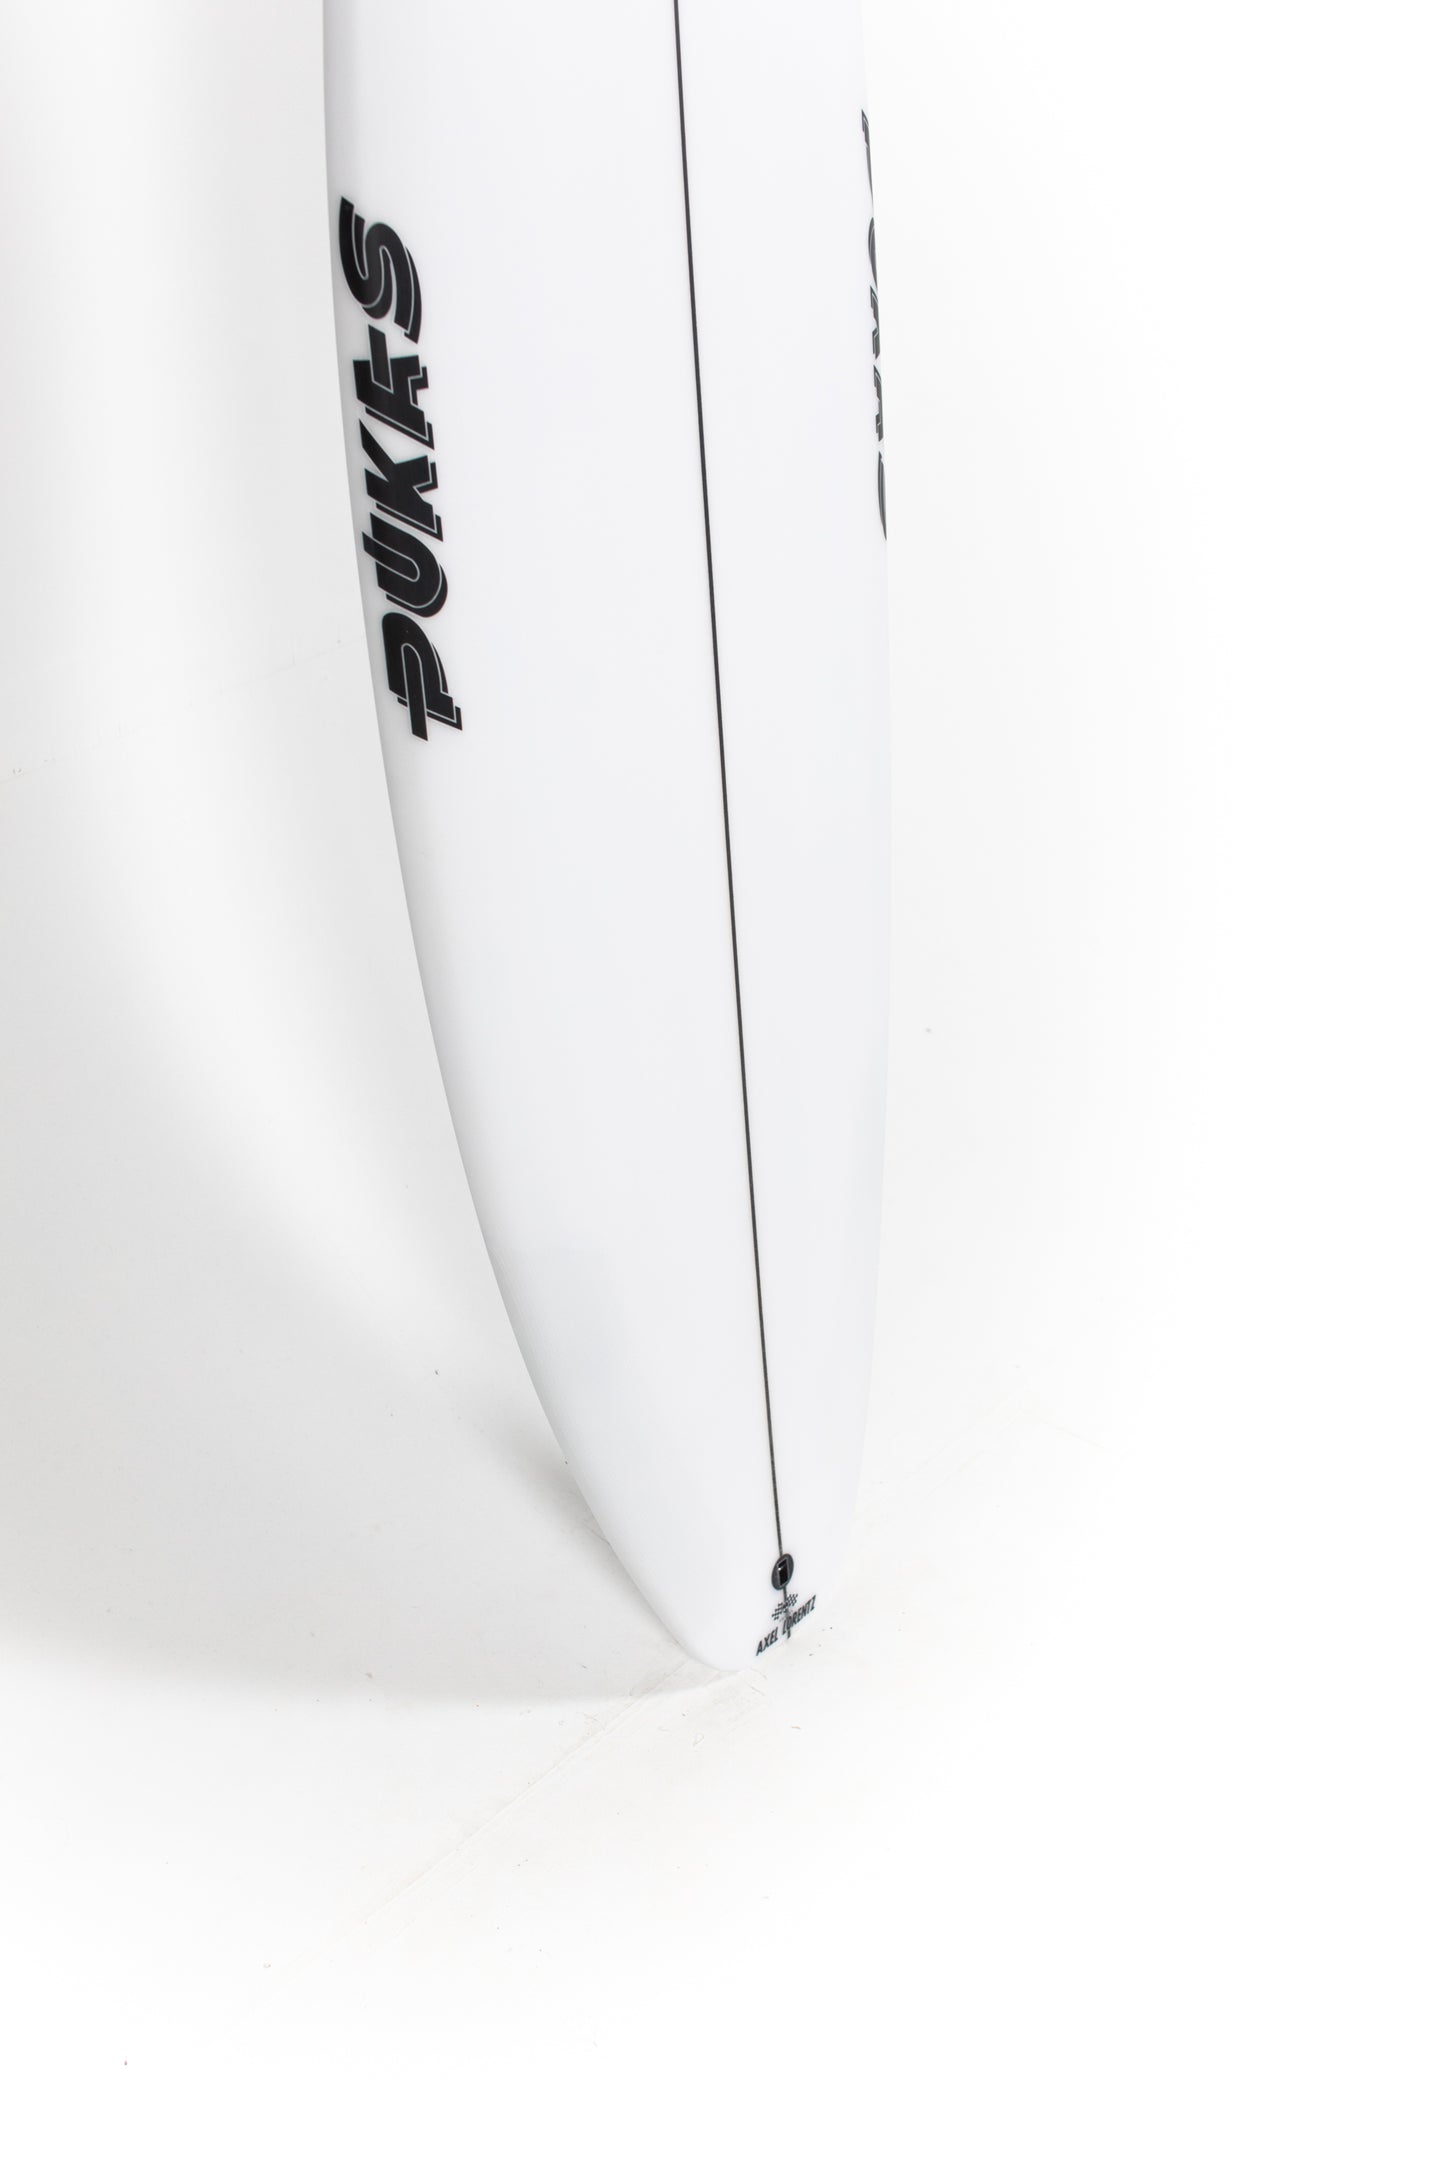 
                  
                    Pukas Surf Shop - Pukas Surfboard - DARKER by Axel Lorentz - 5'10" x 19,25 x 2,31 x 27,76L. - AX08692
                  
                